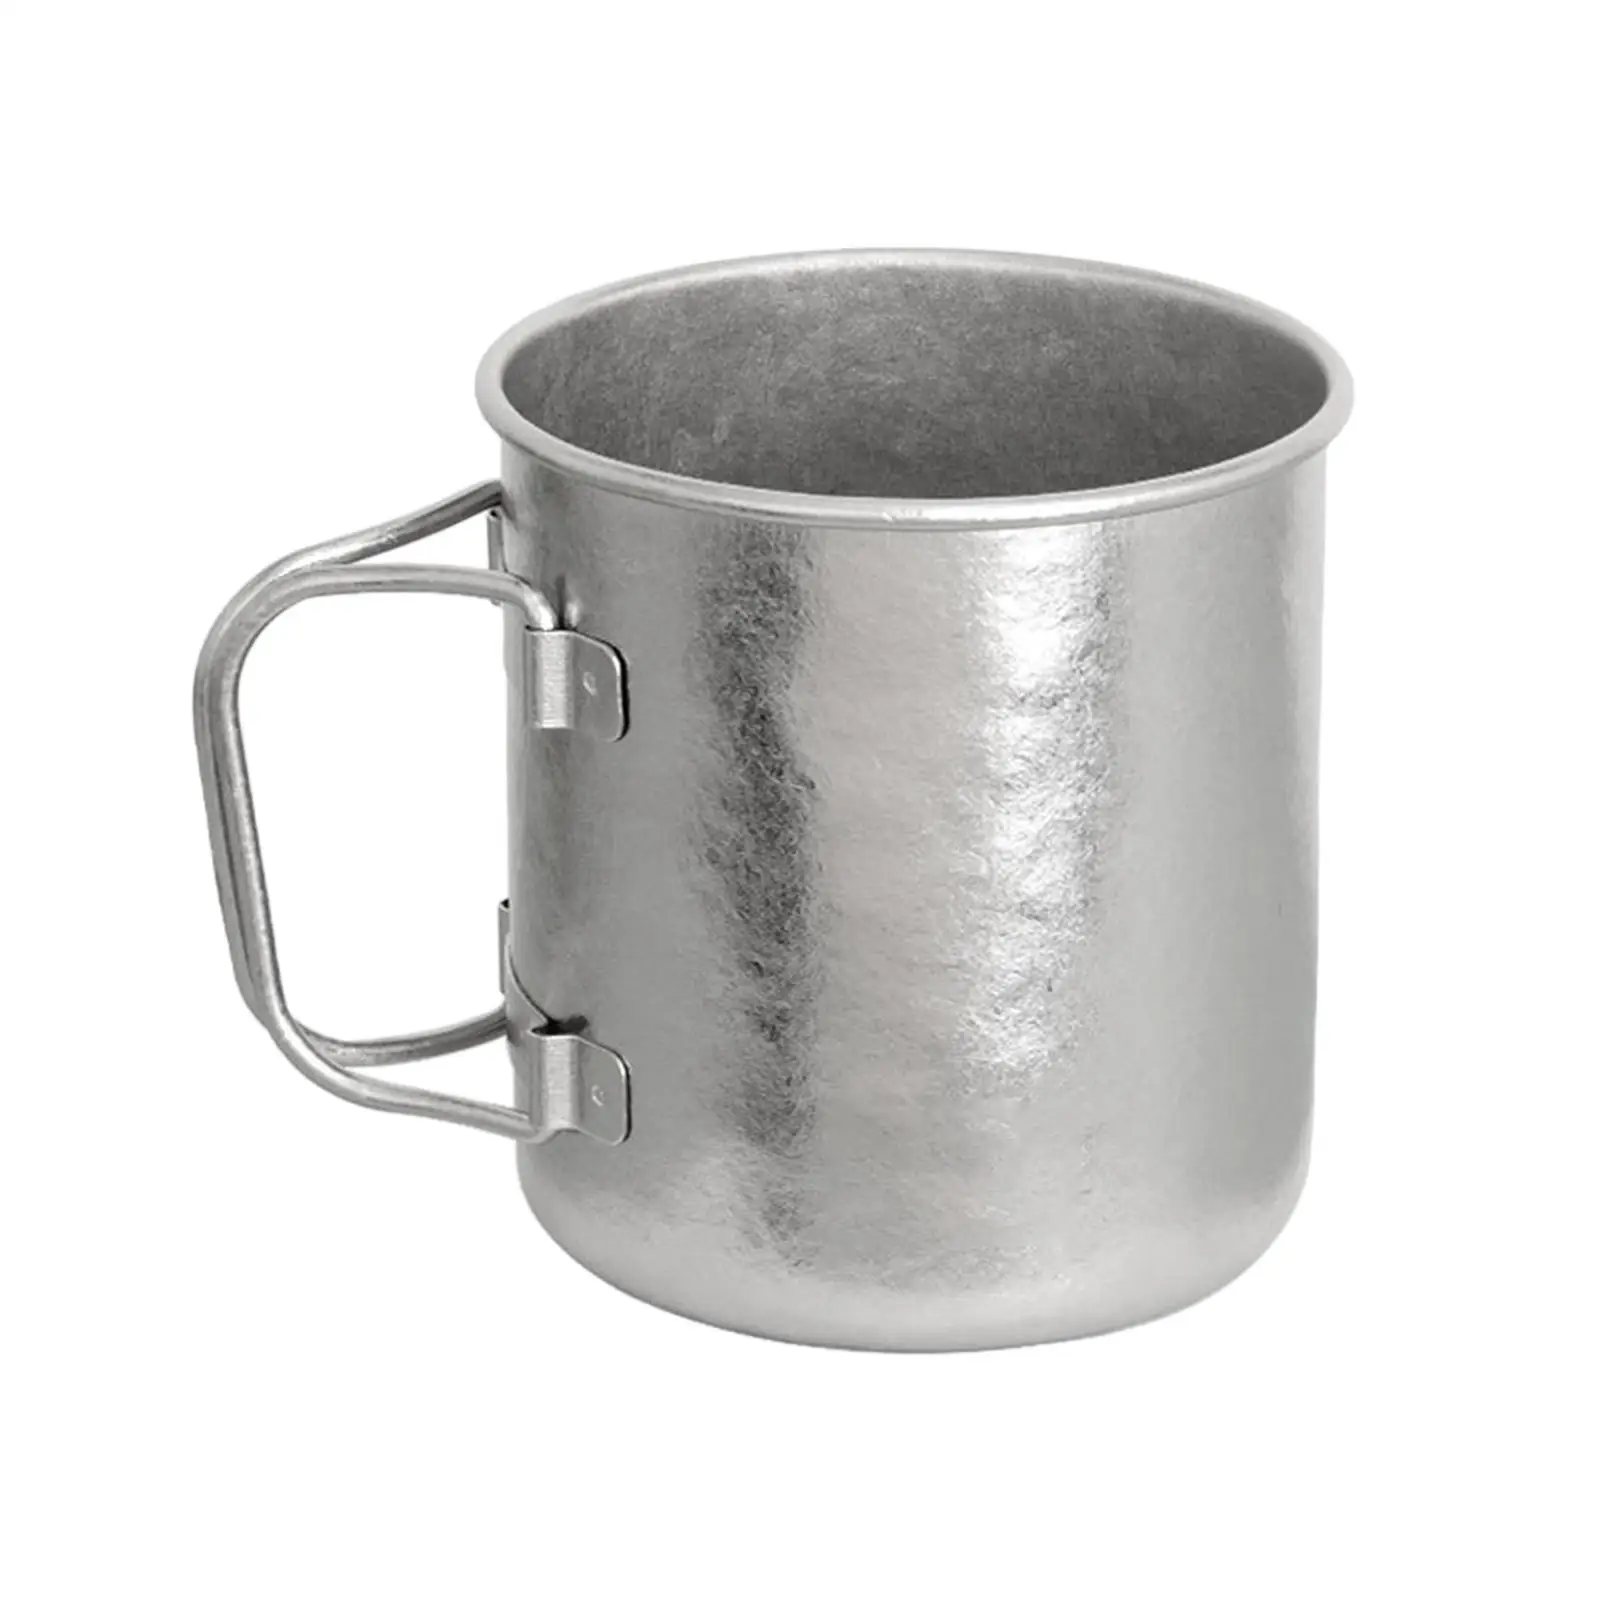 Titanium Mug with Folding Handles Coffee Tea Water Cup for Daily Use Picnics